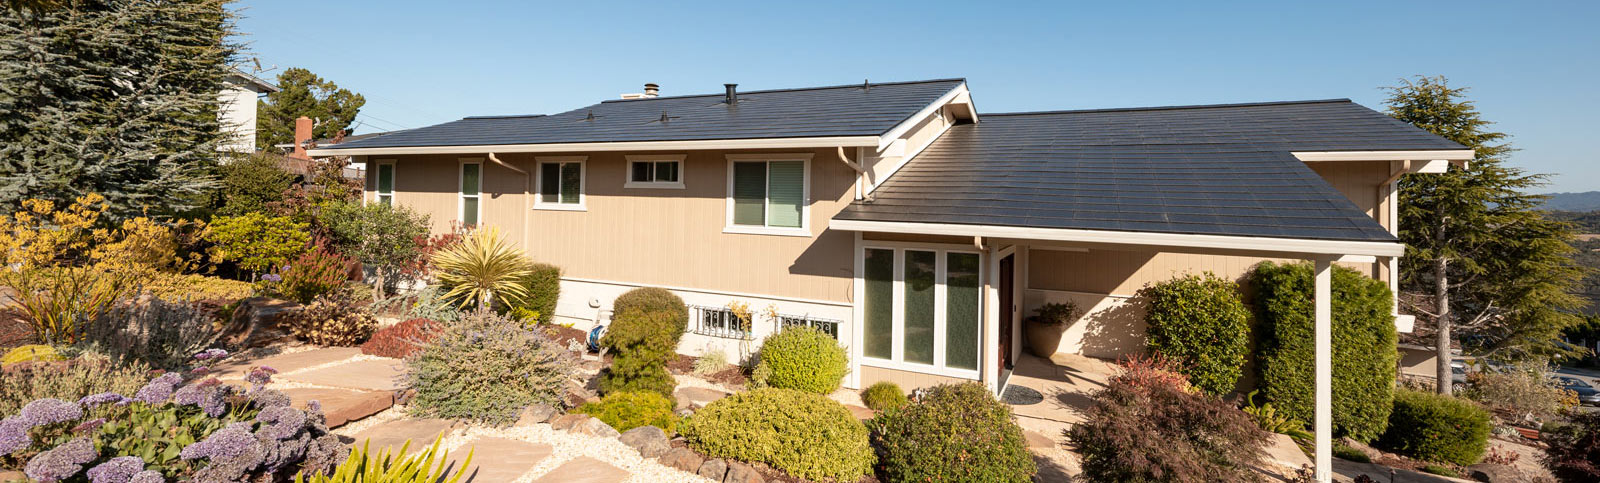 Tesla Solar Roof Example 